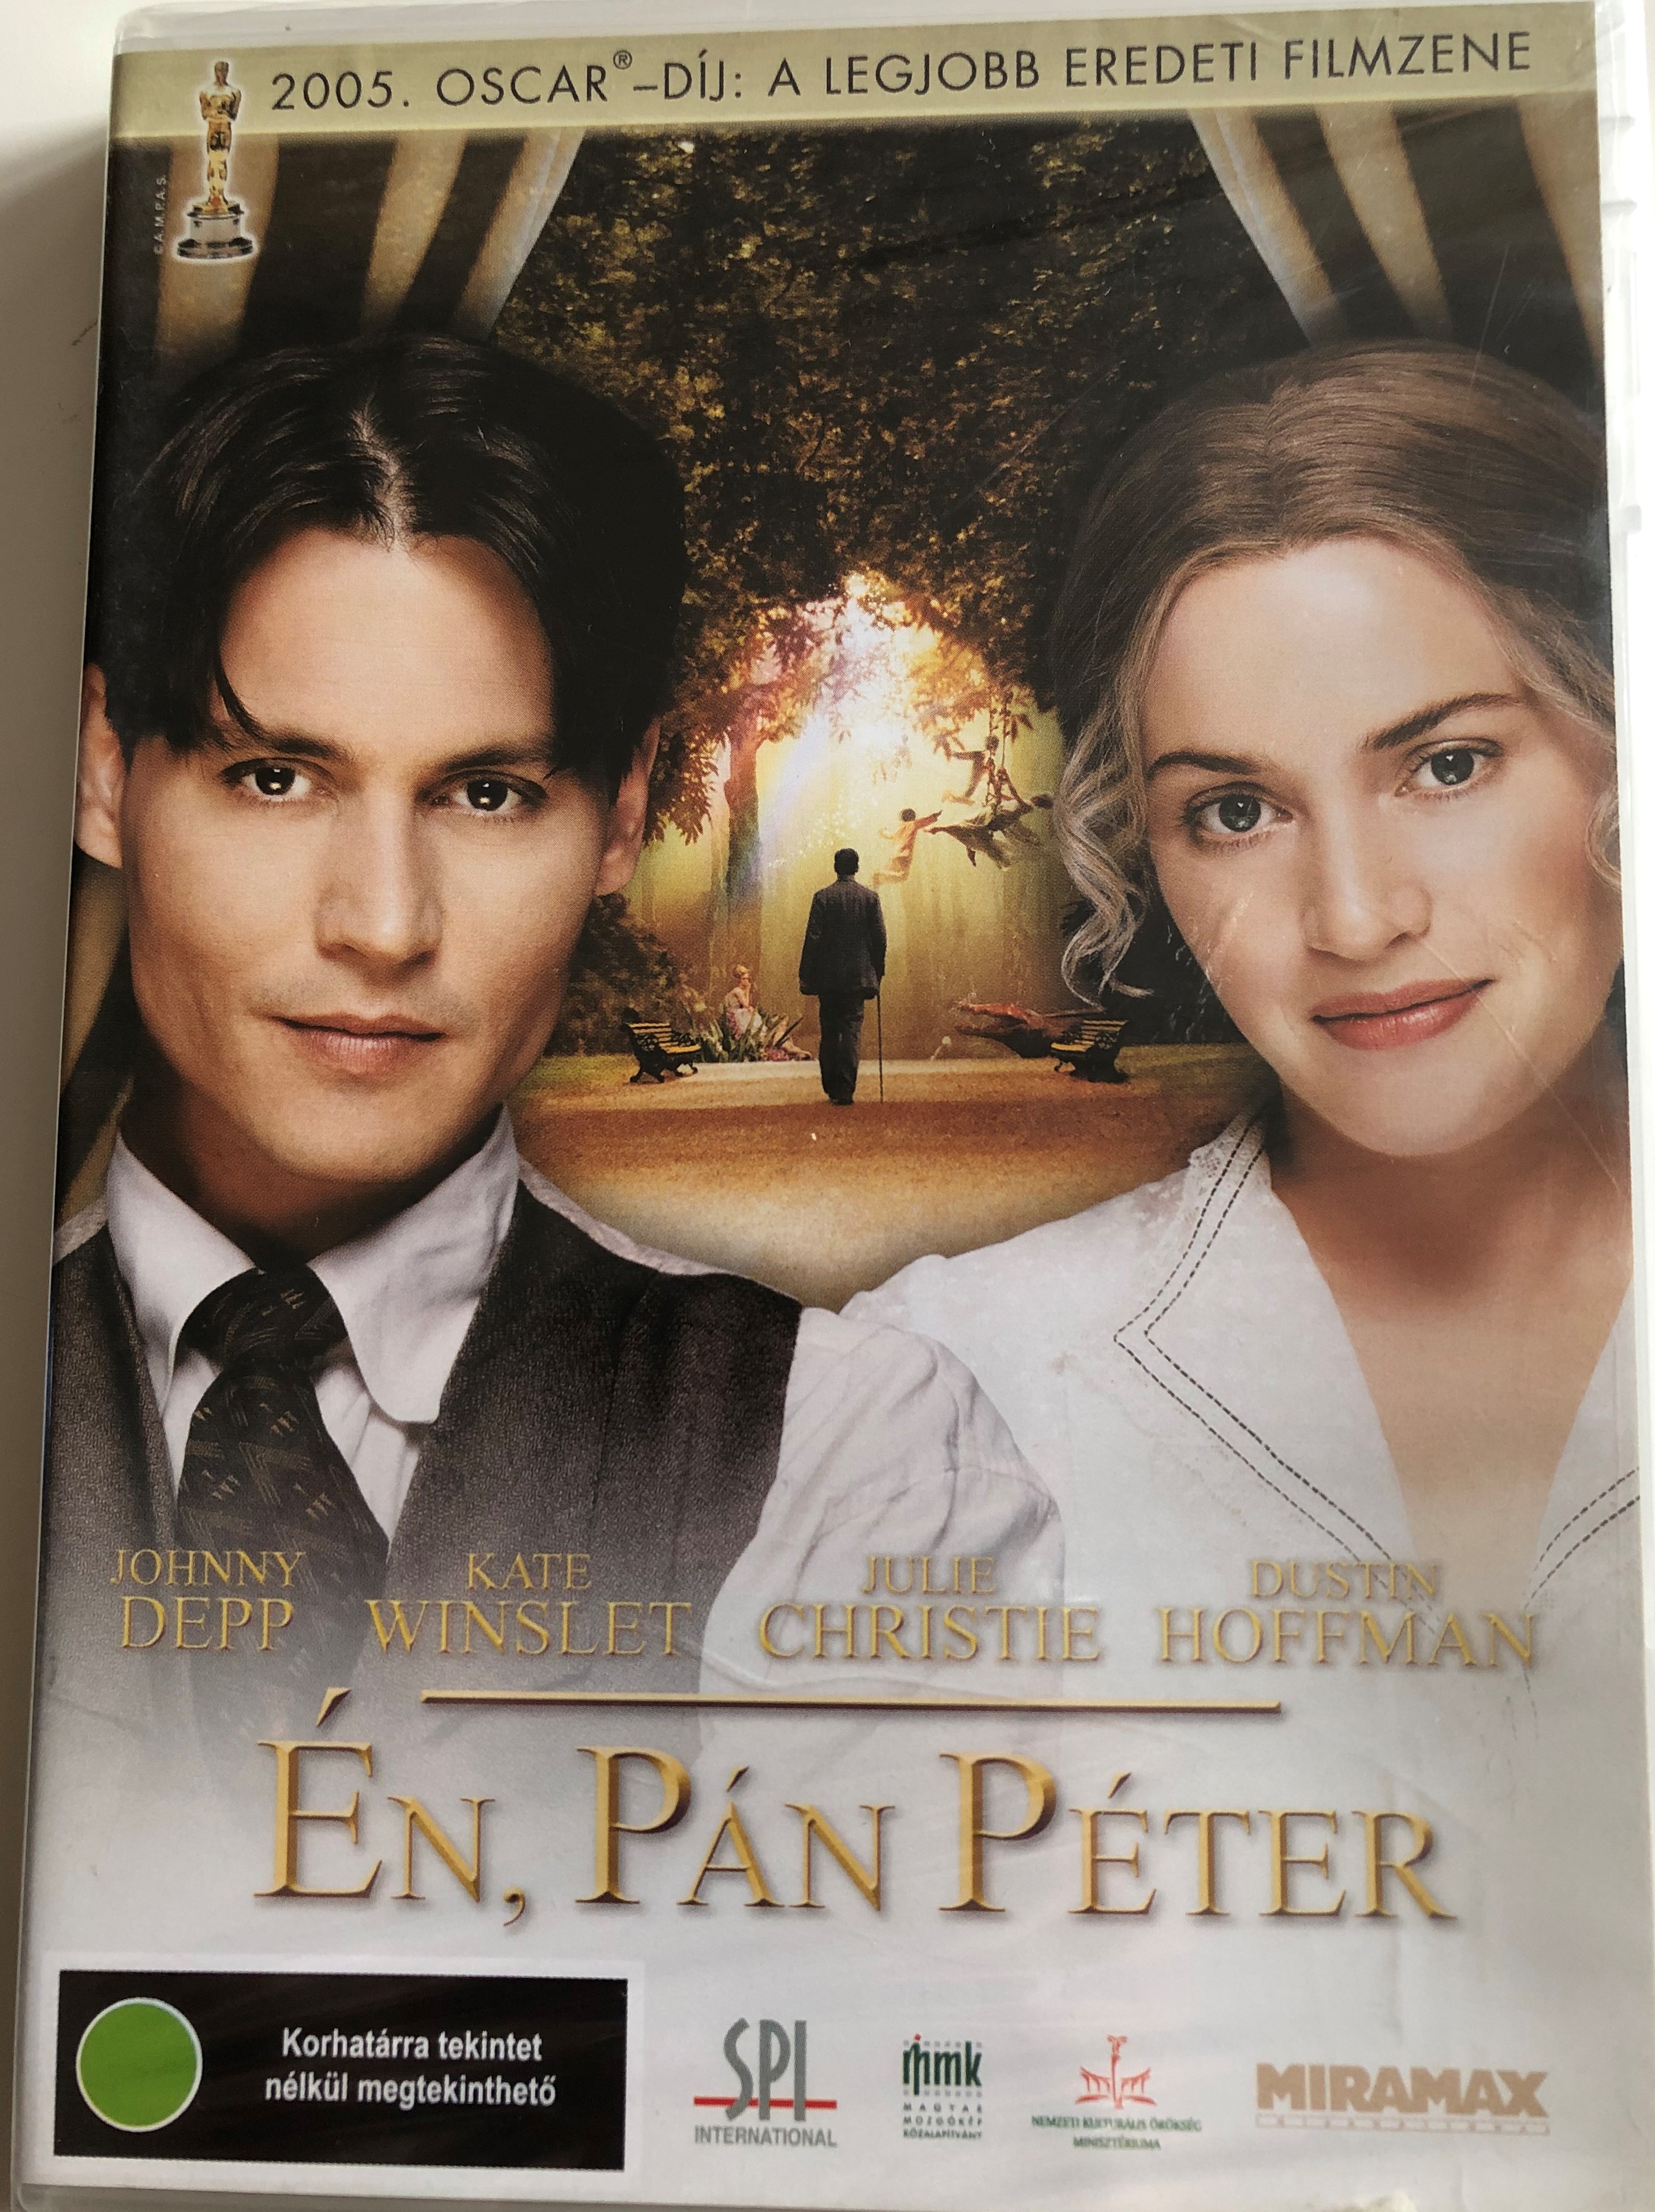 finding-neverland-dvd-2004-n-p-n-p-ter-directed-by-marc-forster-starring-johnny-depp-kate-winslet-julie-christie-dustin-hoffman-1-.jpg